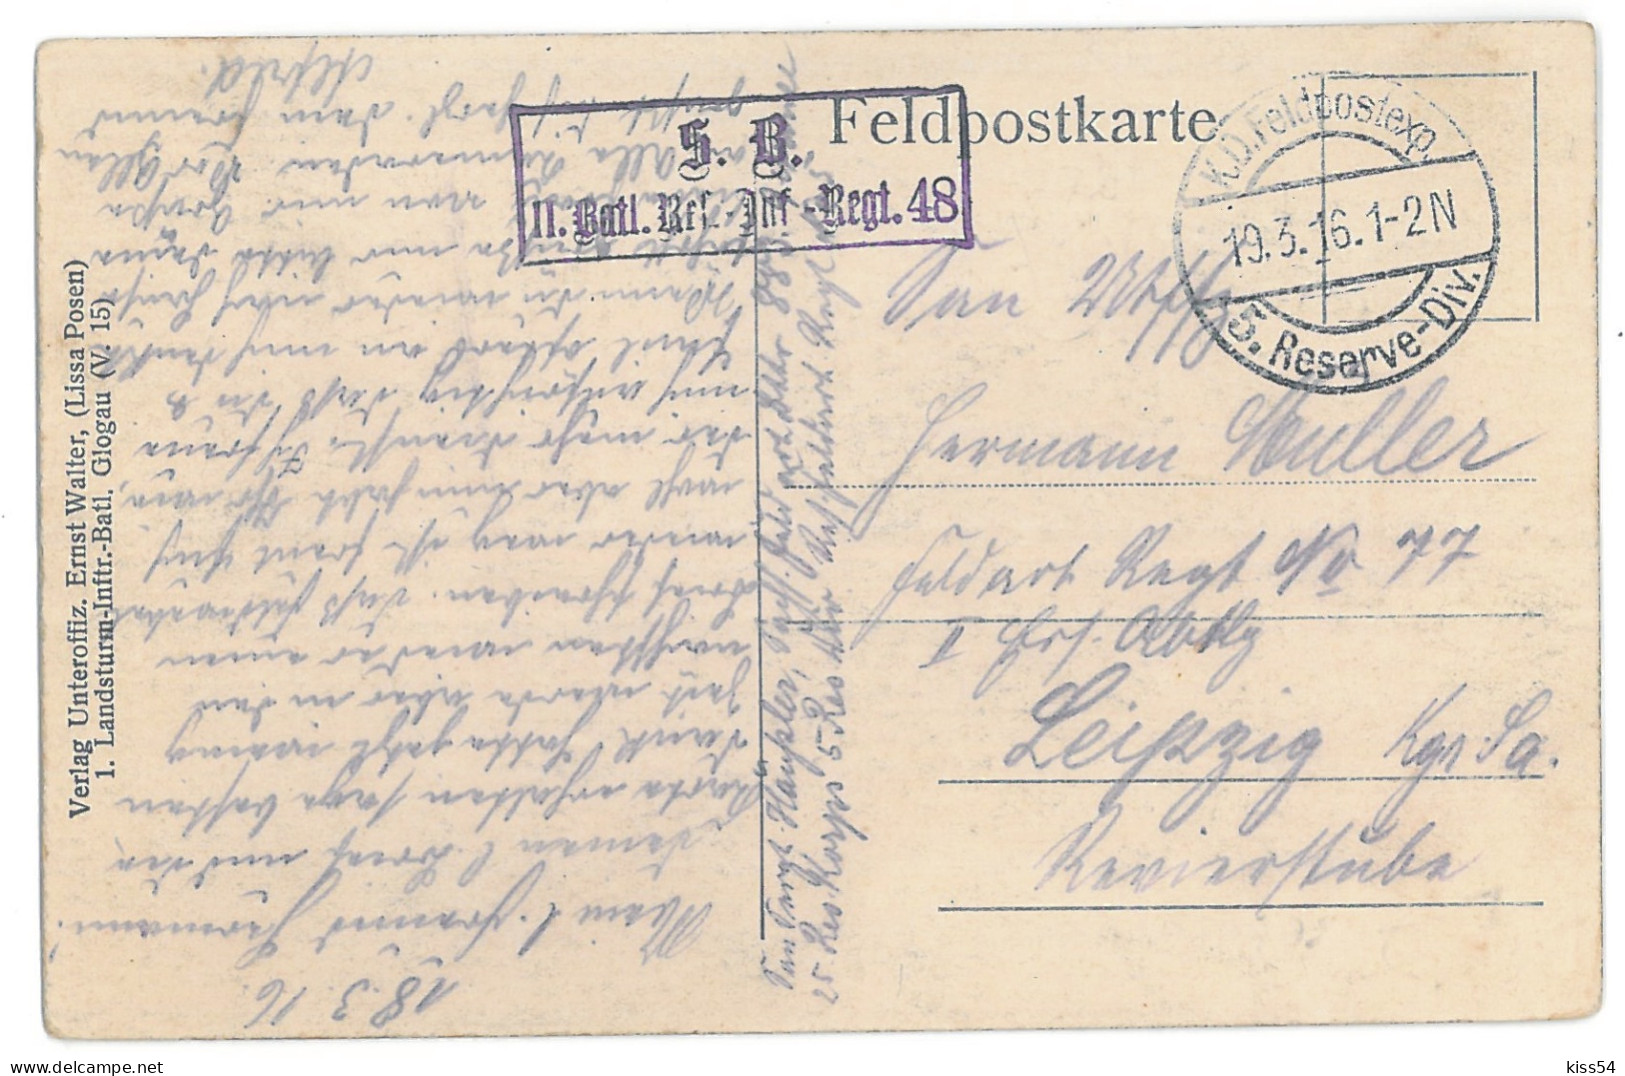 BL 24 - 13296 NOWOJELNIA, Belarus - Old Postcard, CENSOR - Used - 1916 - Belarus